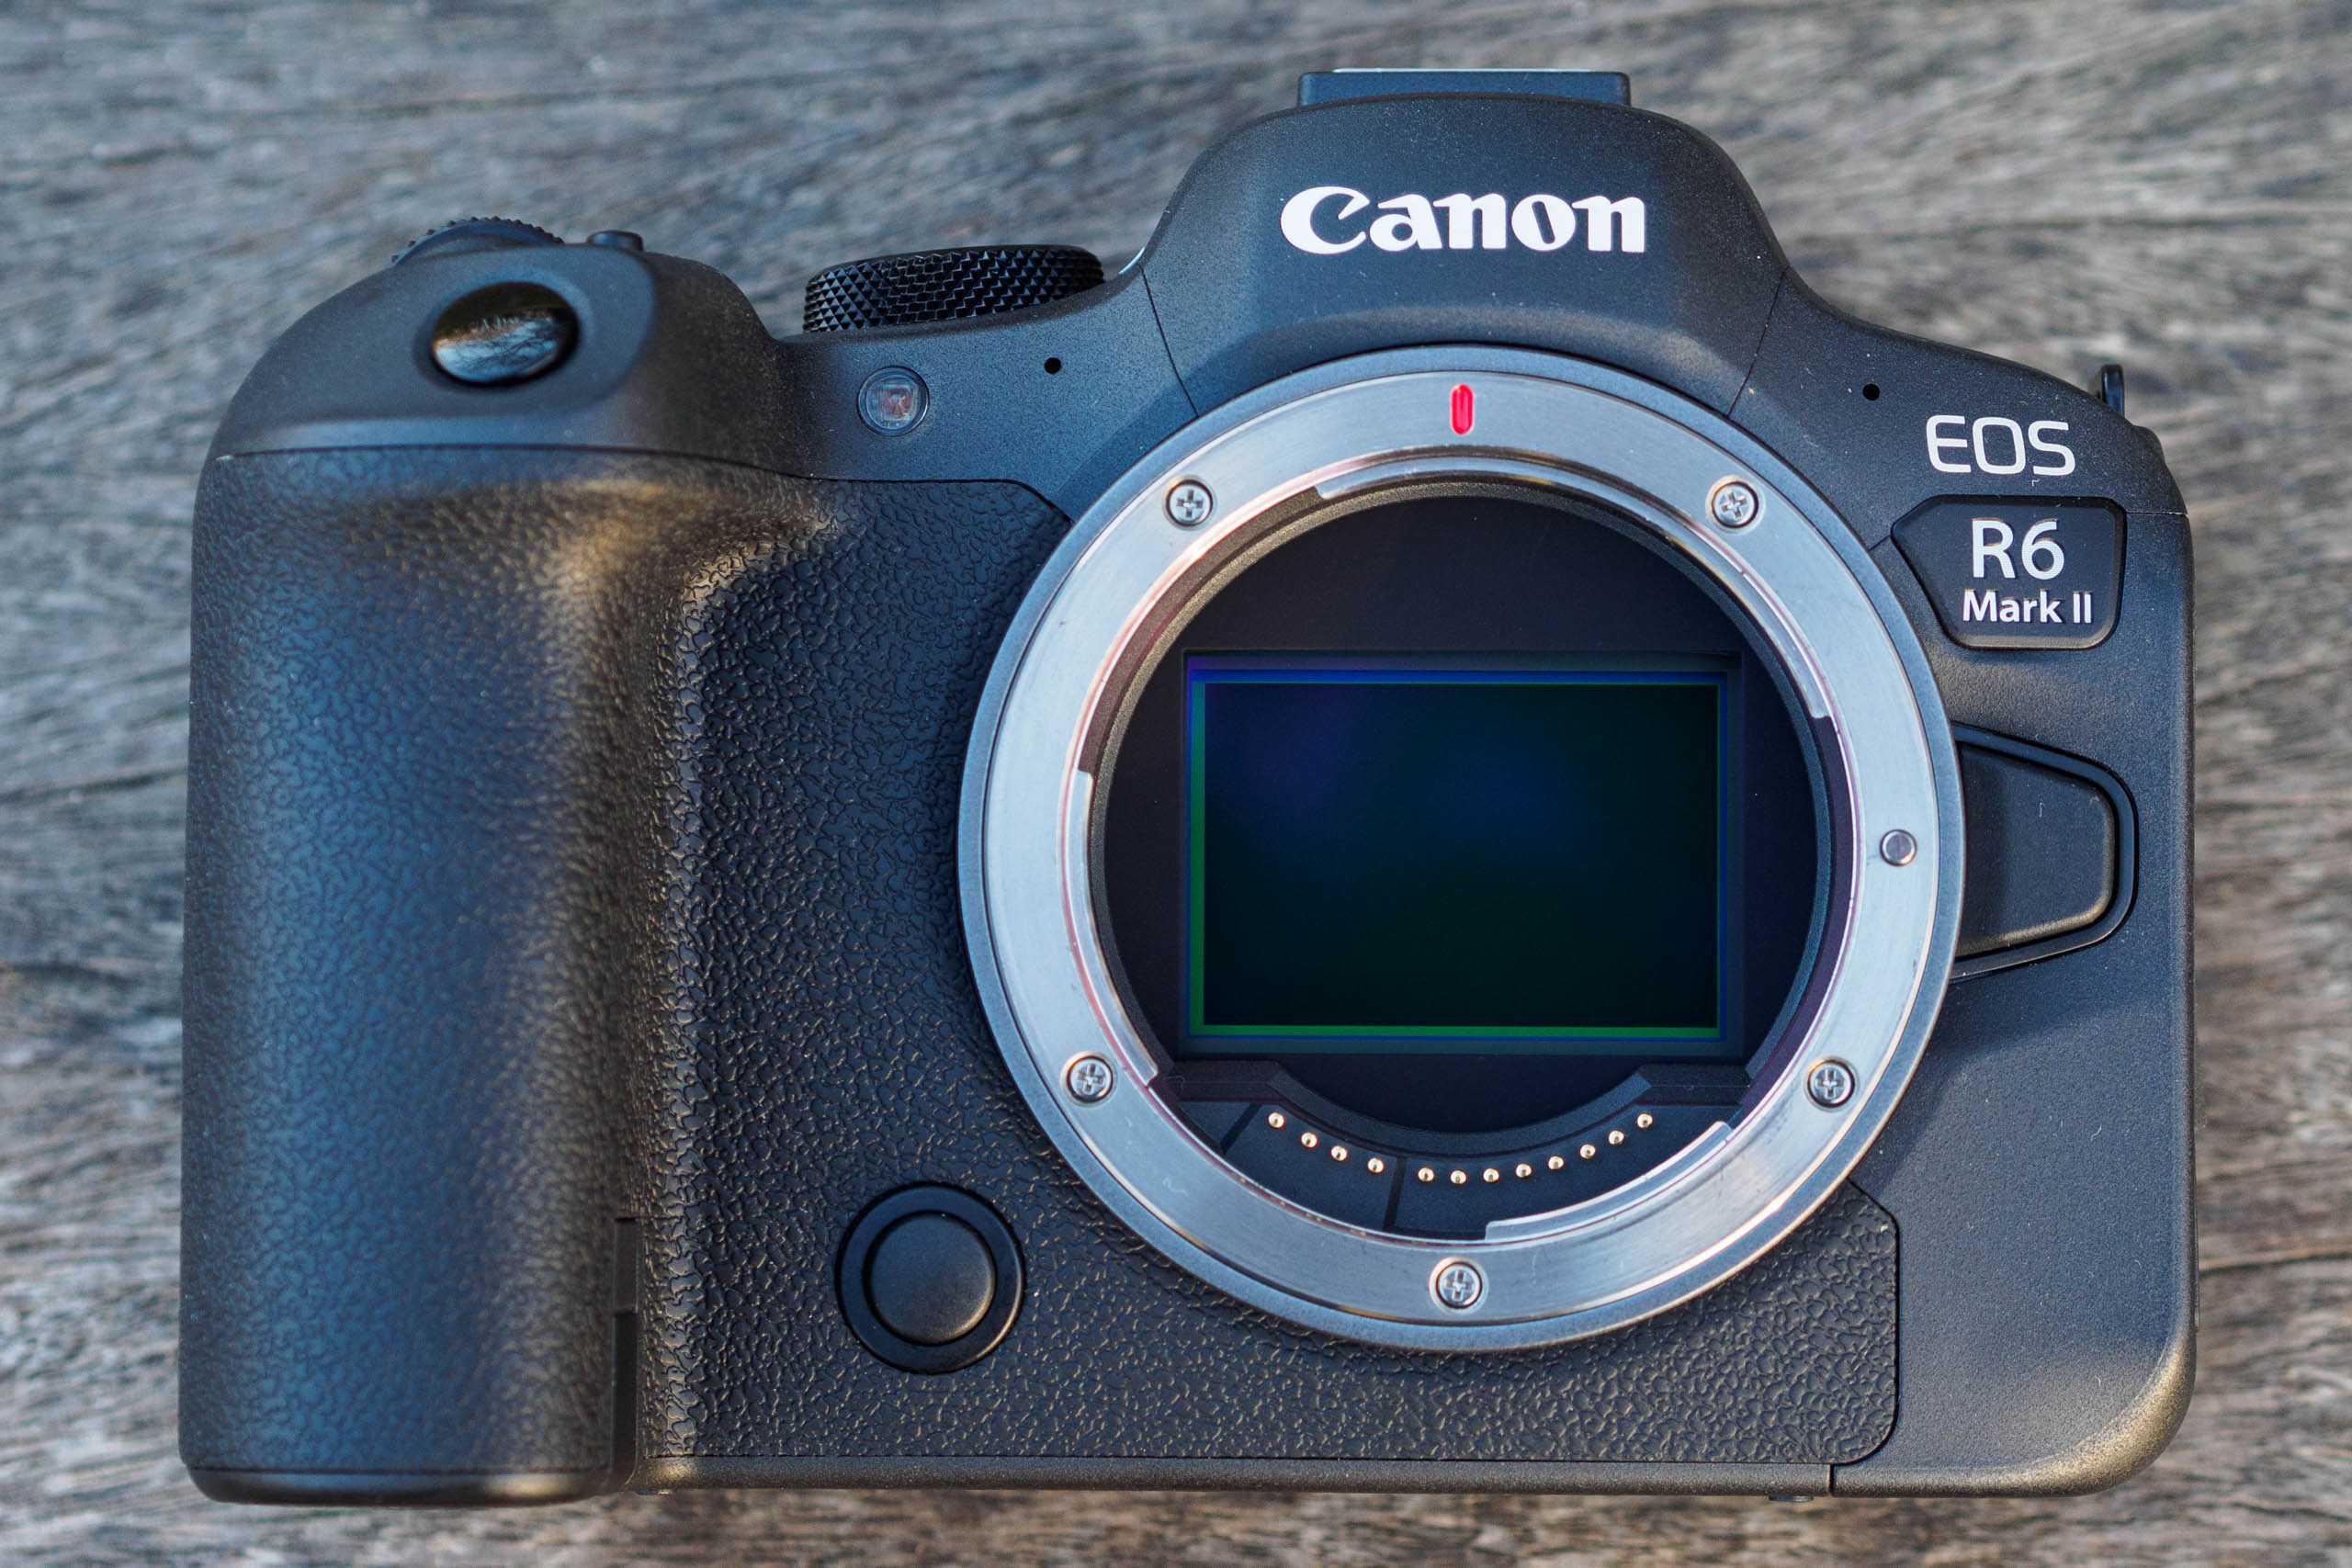 Cámara Canon Mirrorless EOS R6 + RF24-105mm IS STM (Descontinuada)